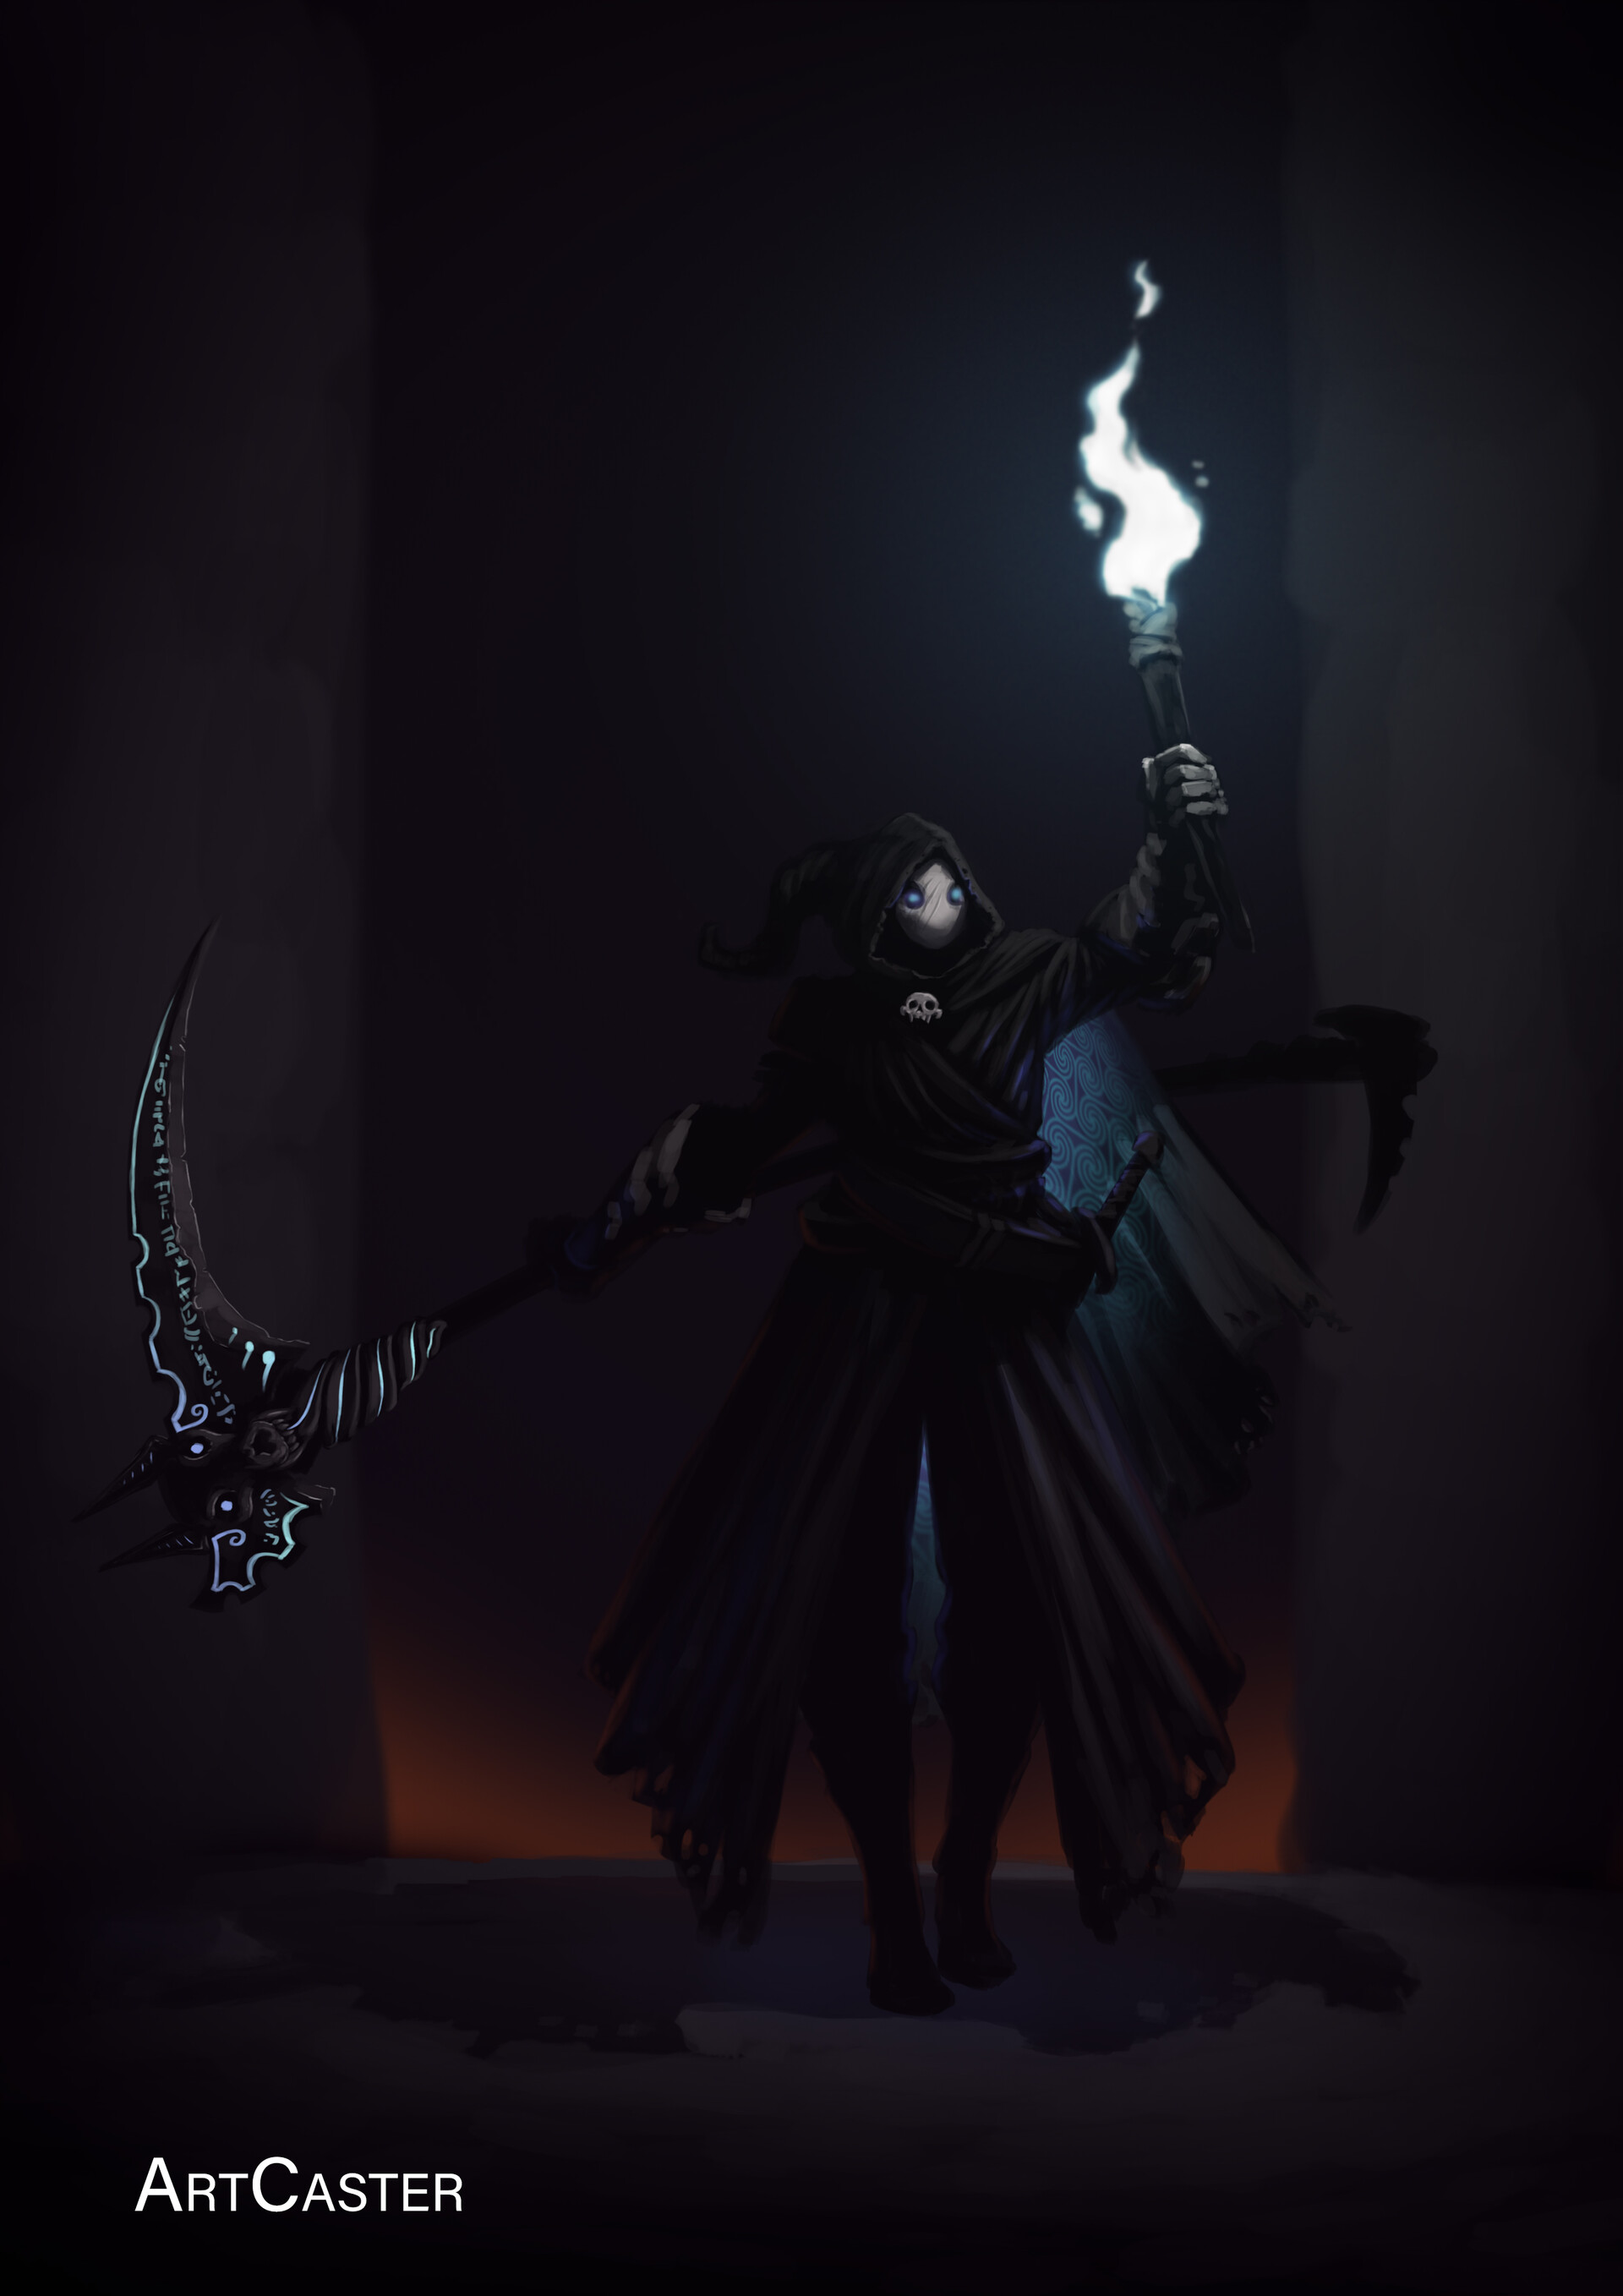 ArtStation - Reaper